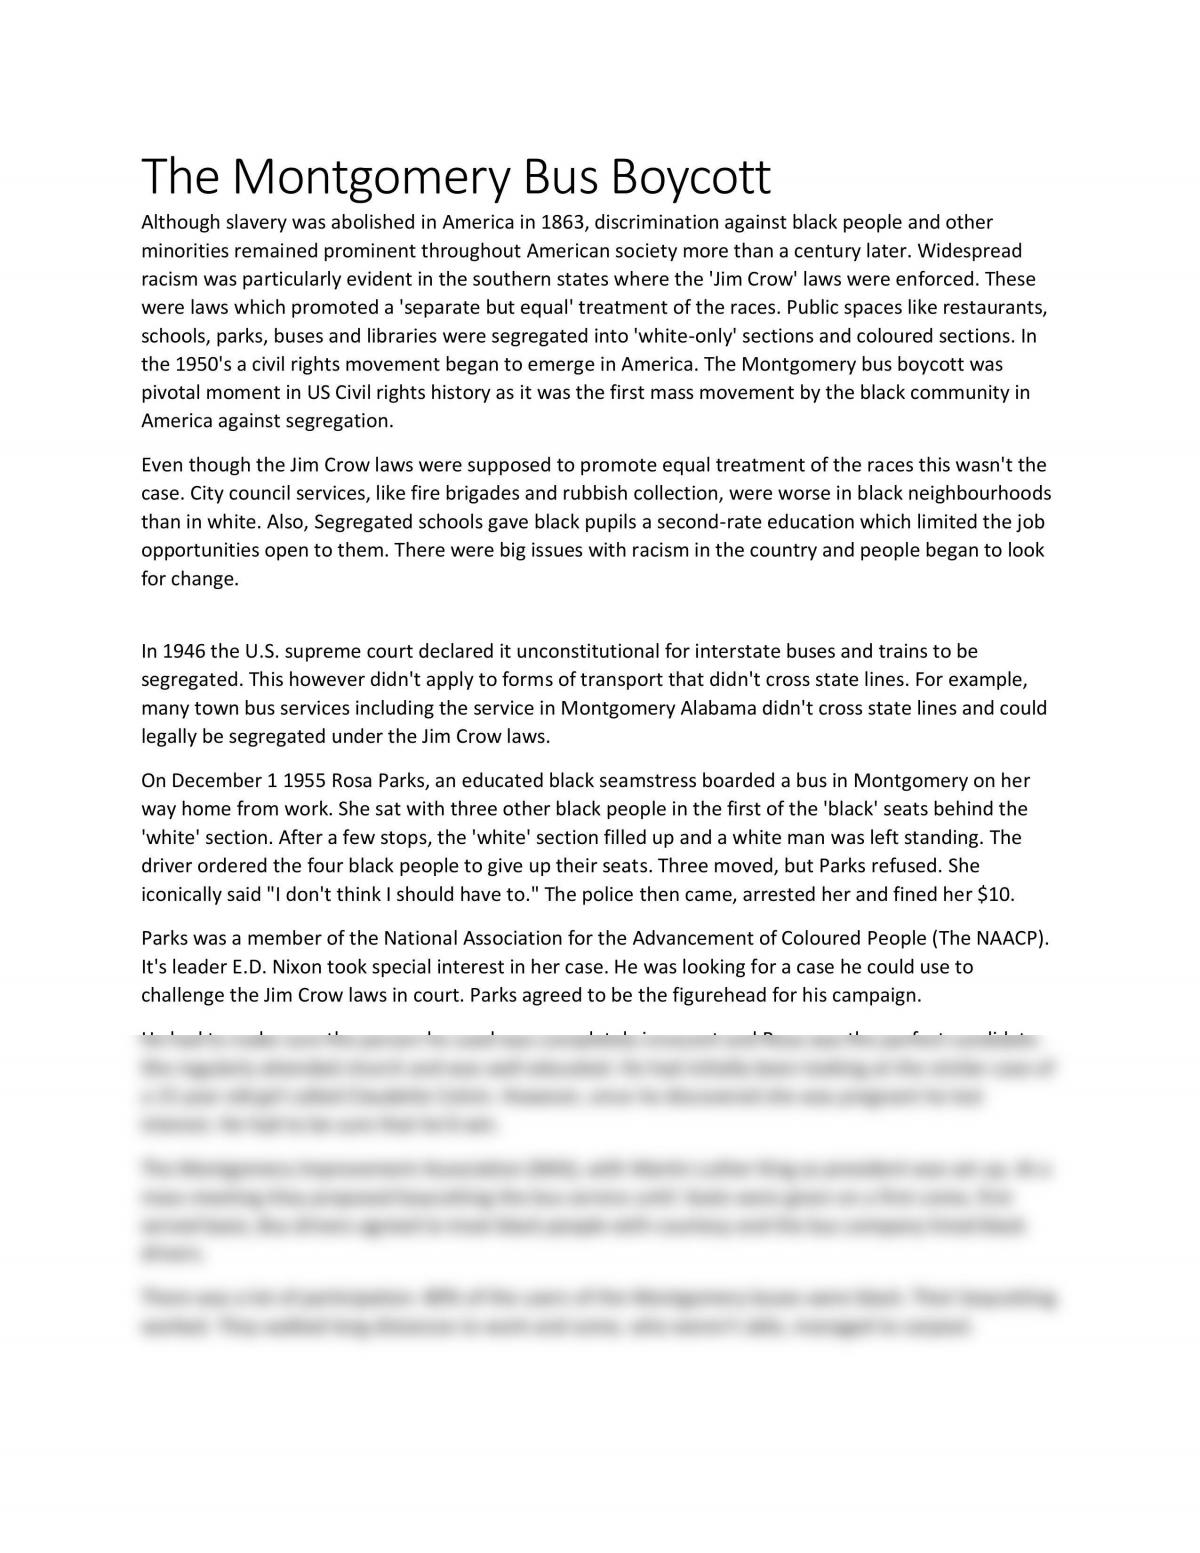 montgomery bus boycott sample essay